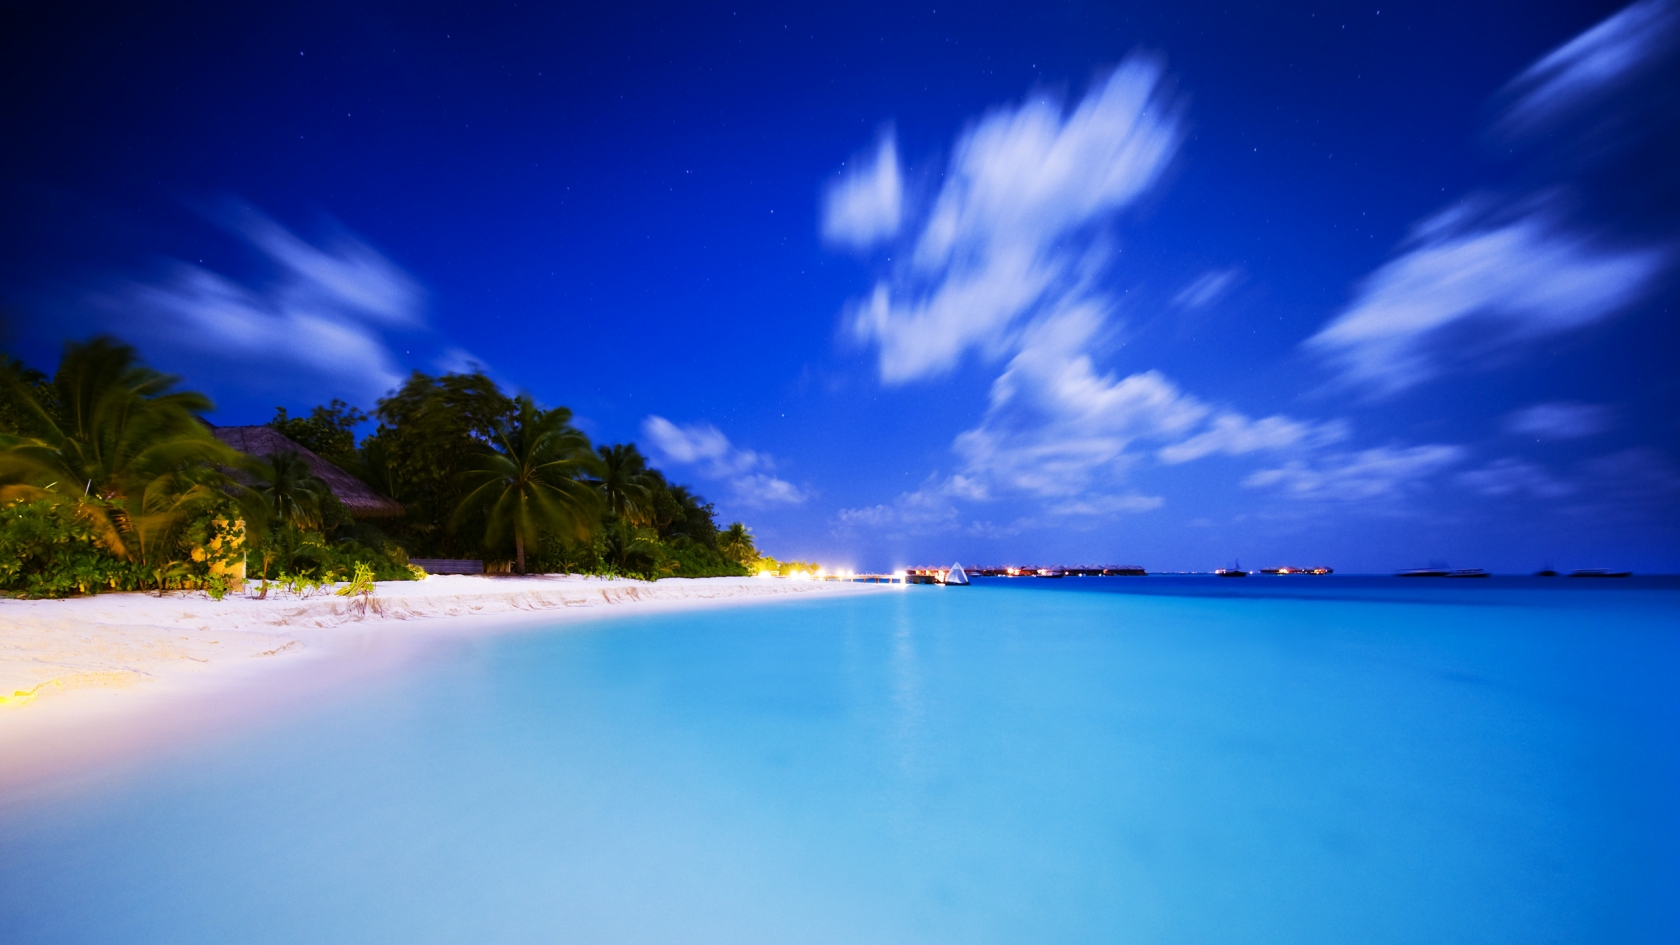 Maldivian Night for 1680 x 945 HDTV resolution